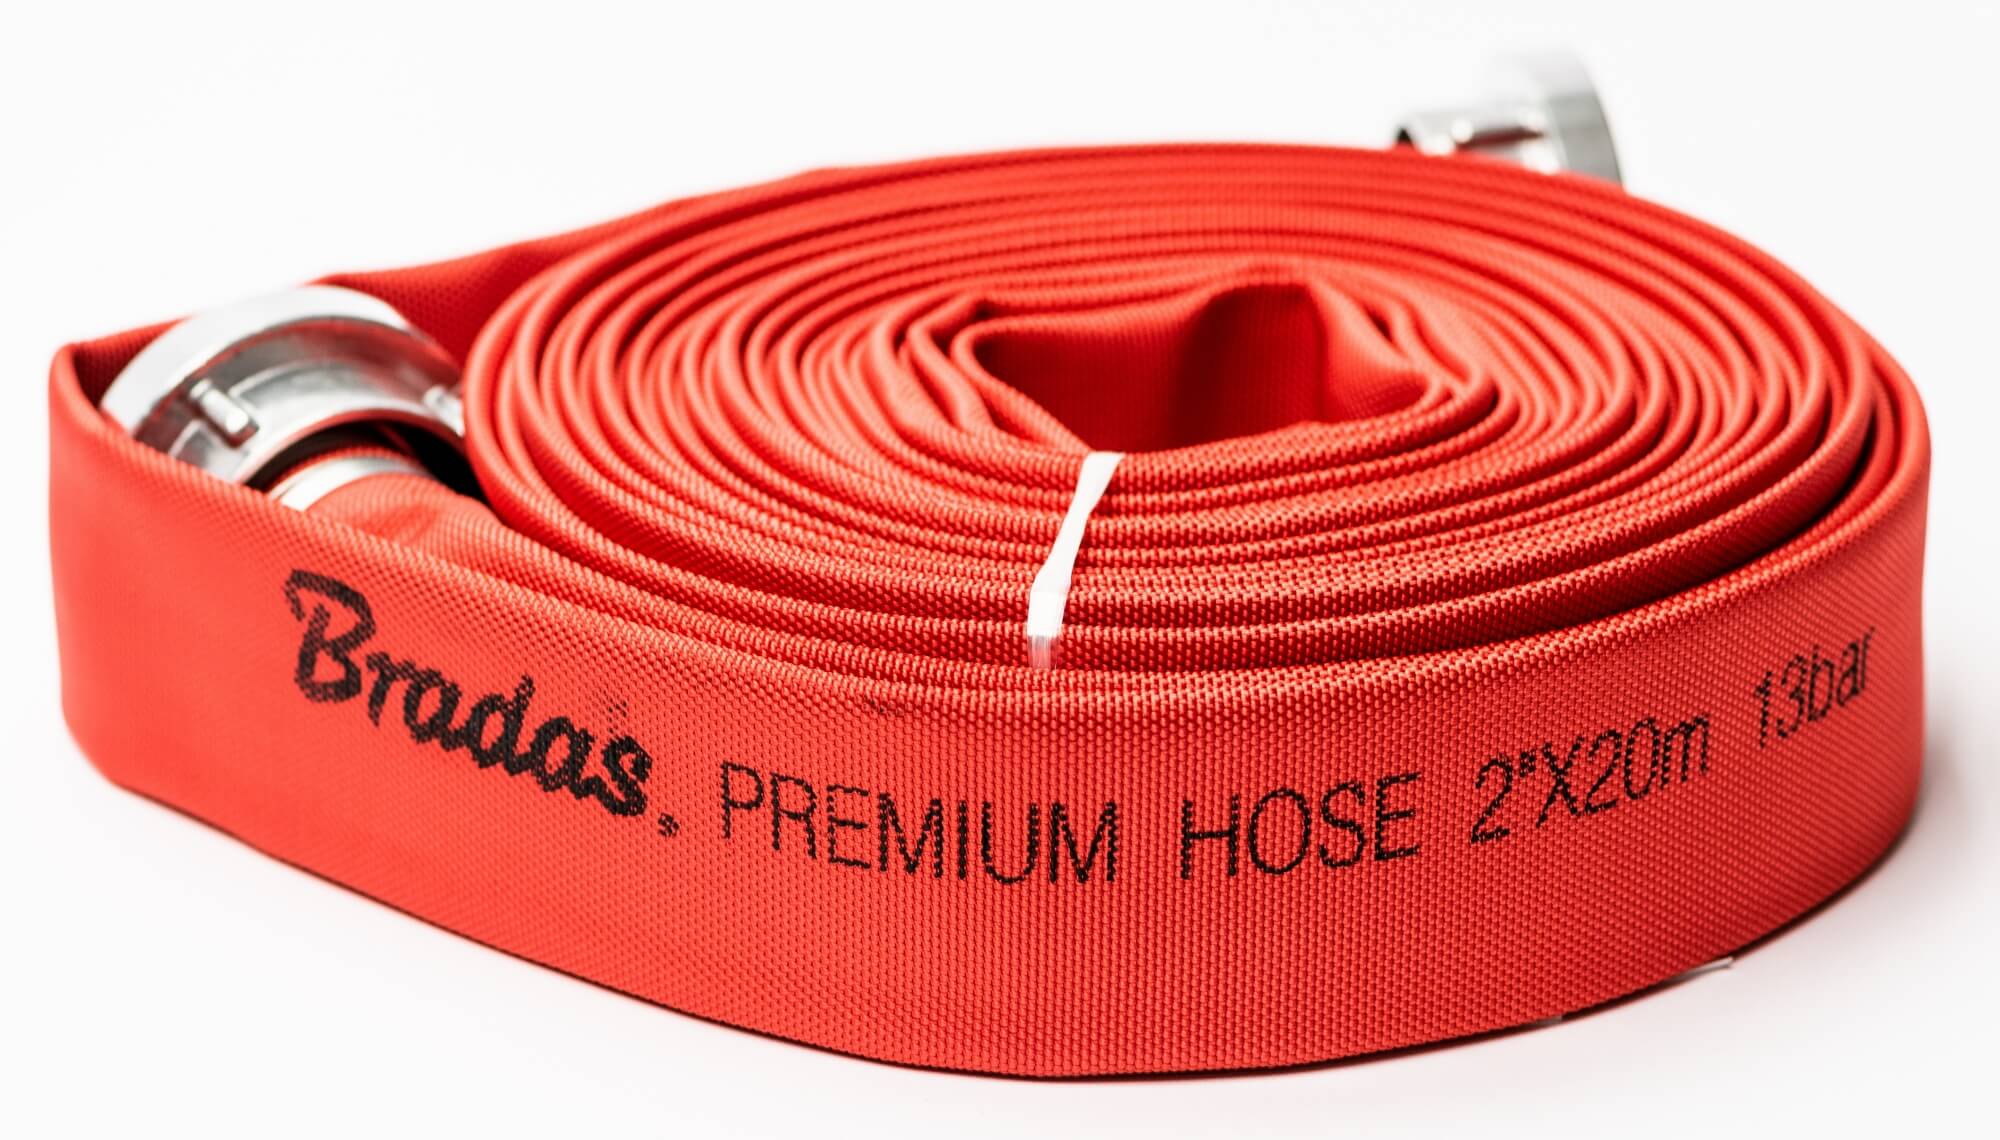 Hadice hasičská Bradas Premium 2˝ 20 m